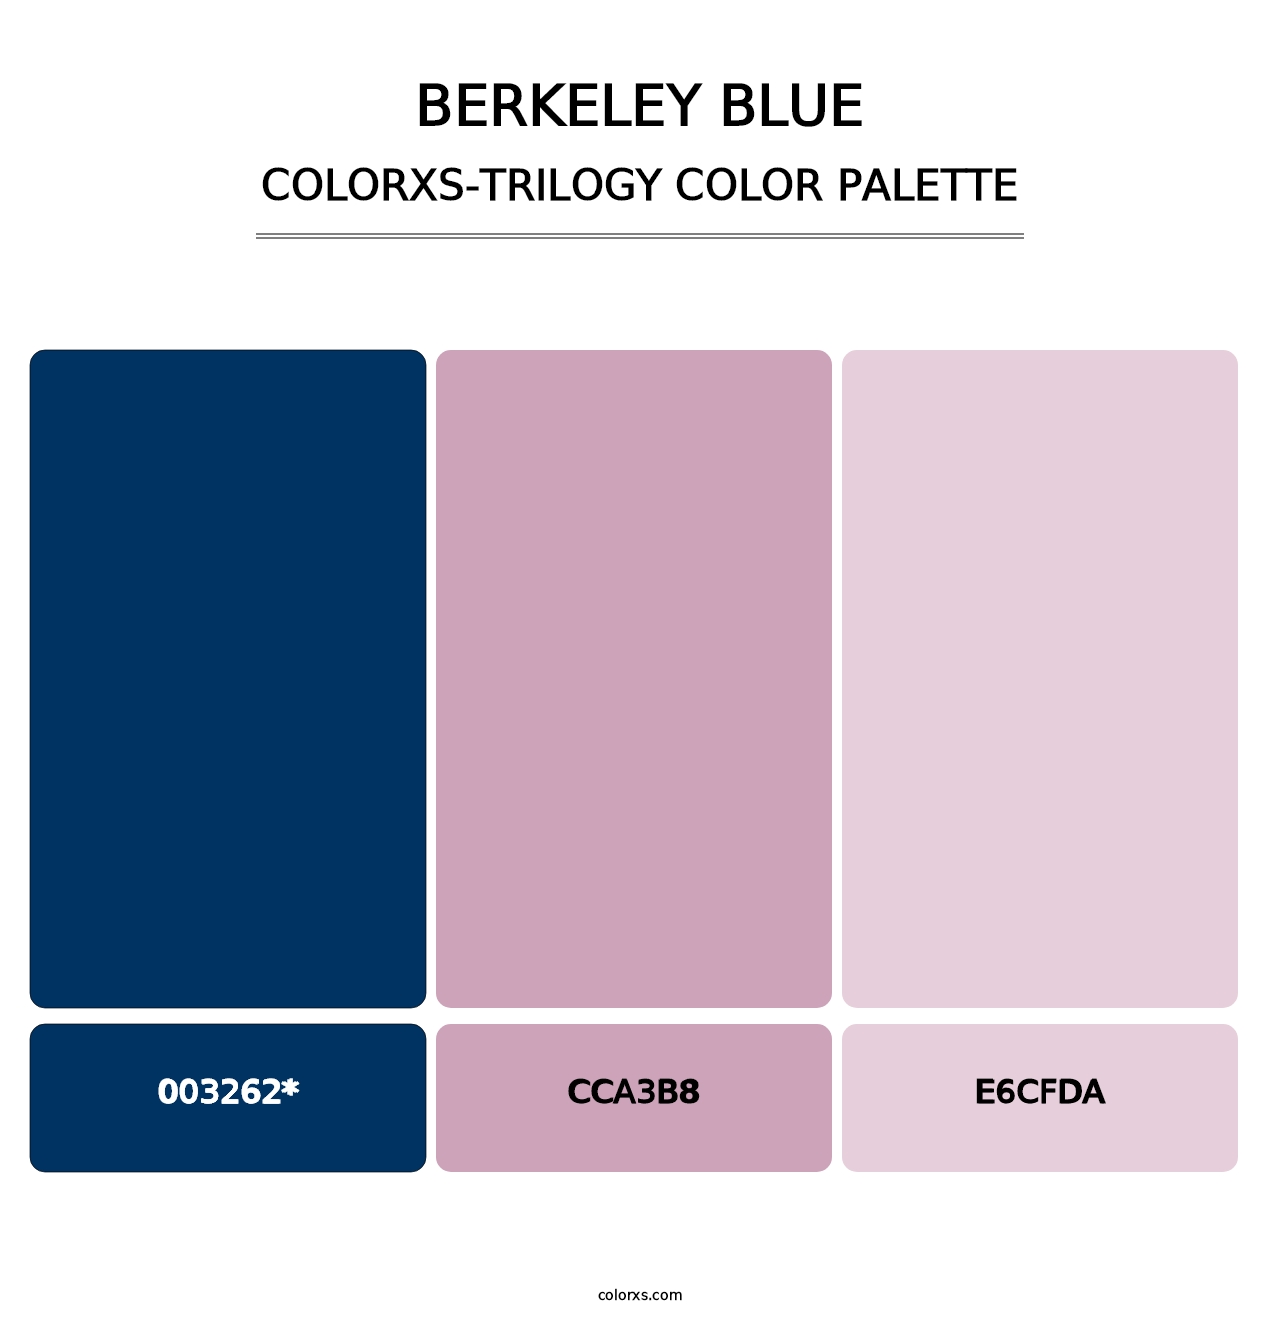 Berkeley Blue - Colorxs Trilogy Palette